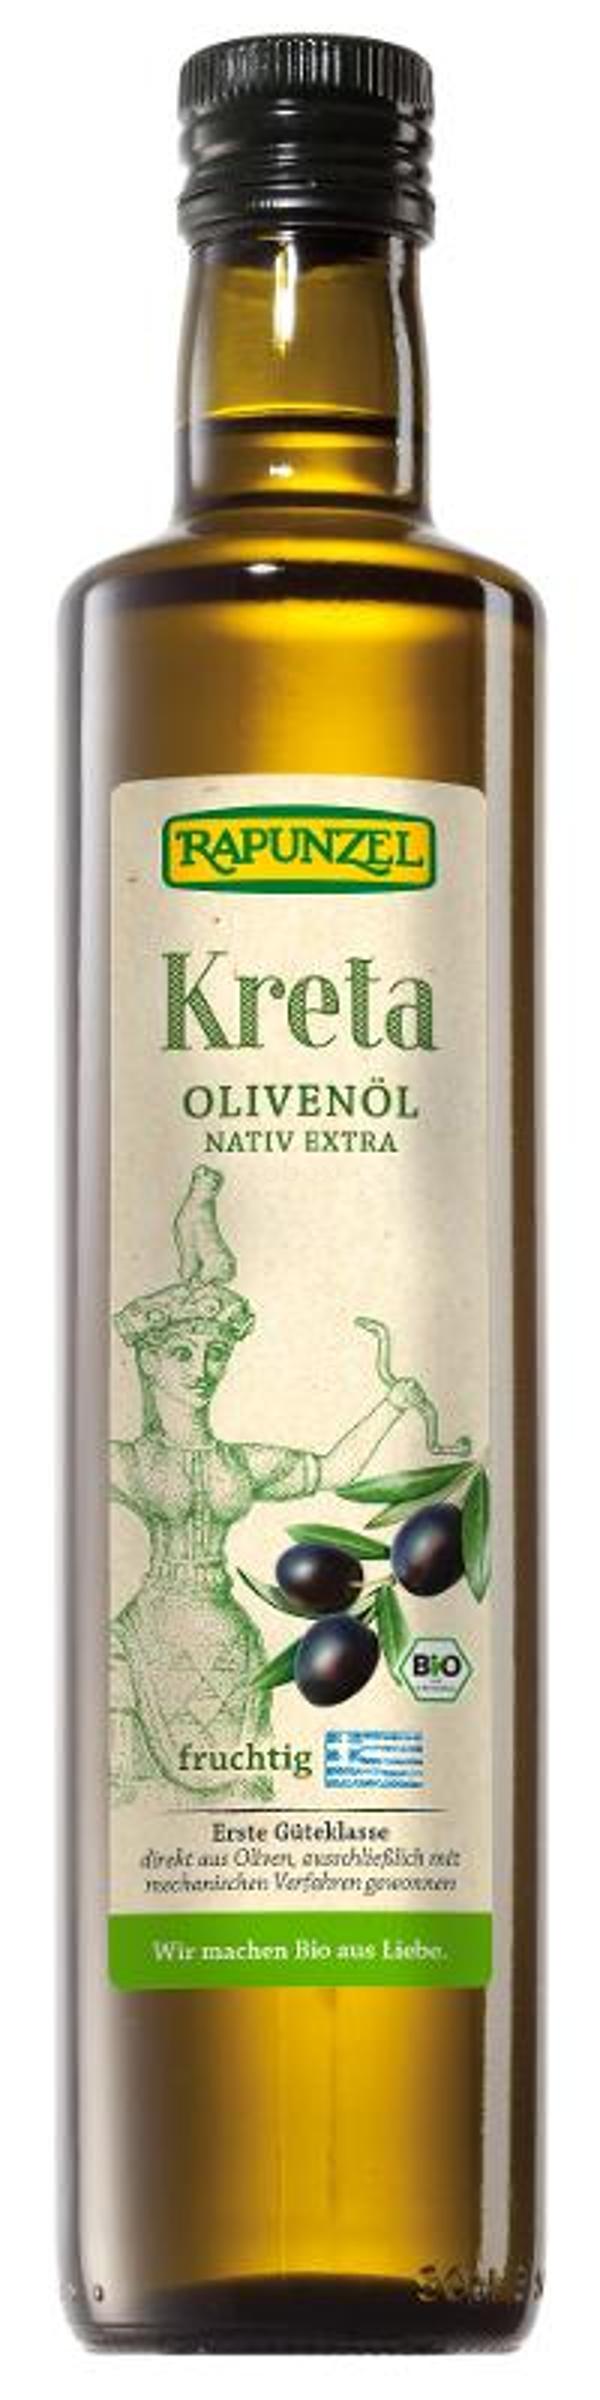 Produktfoto zu Olivenöl Kreta P.G.I., nativ extra, 0,5l